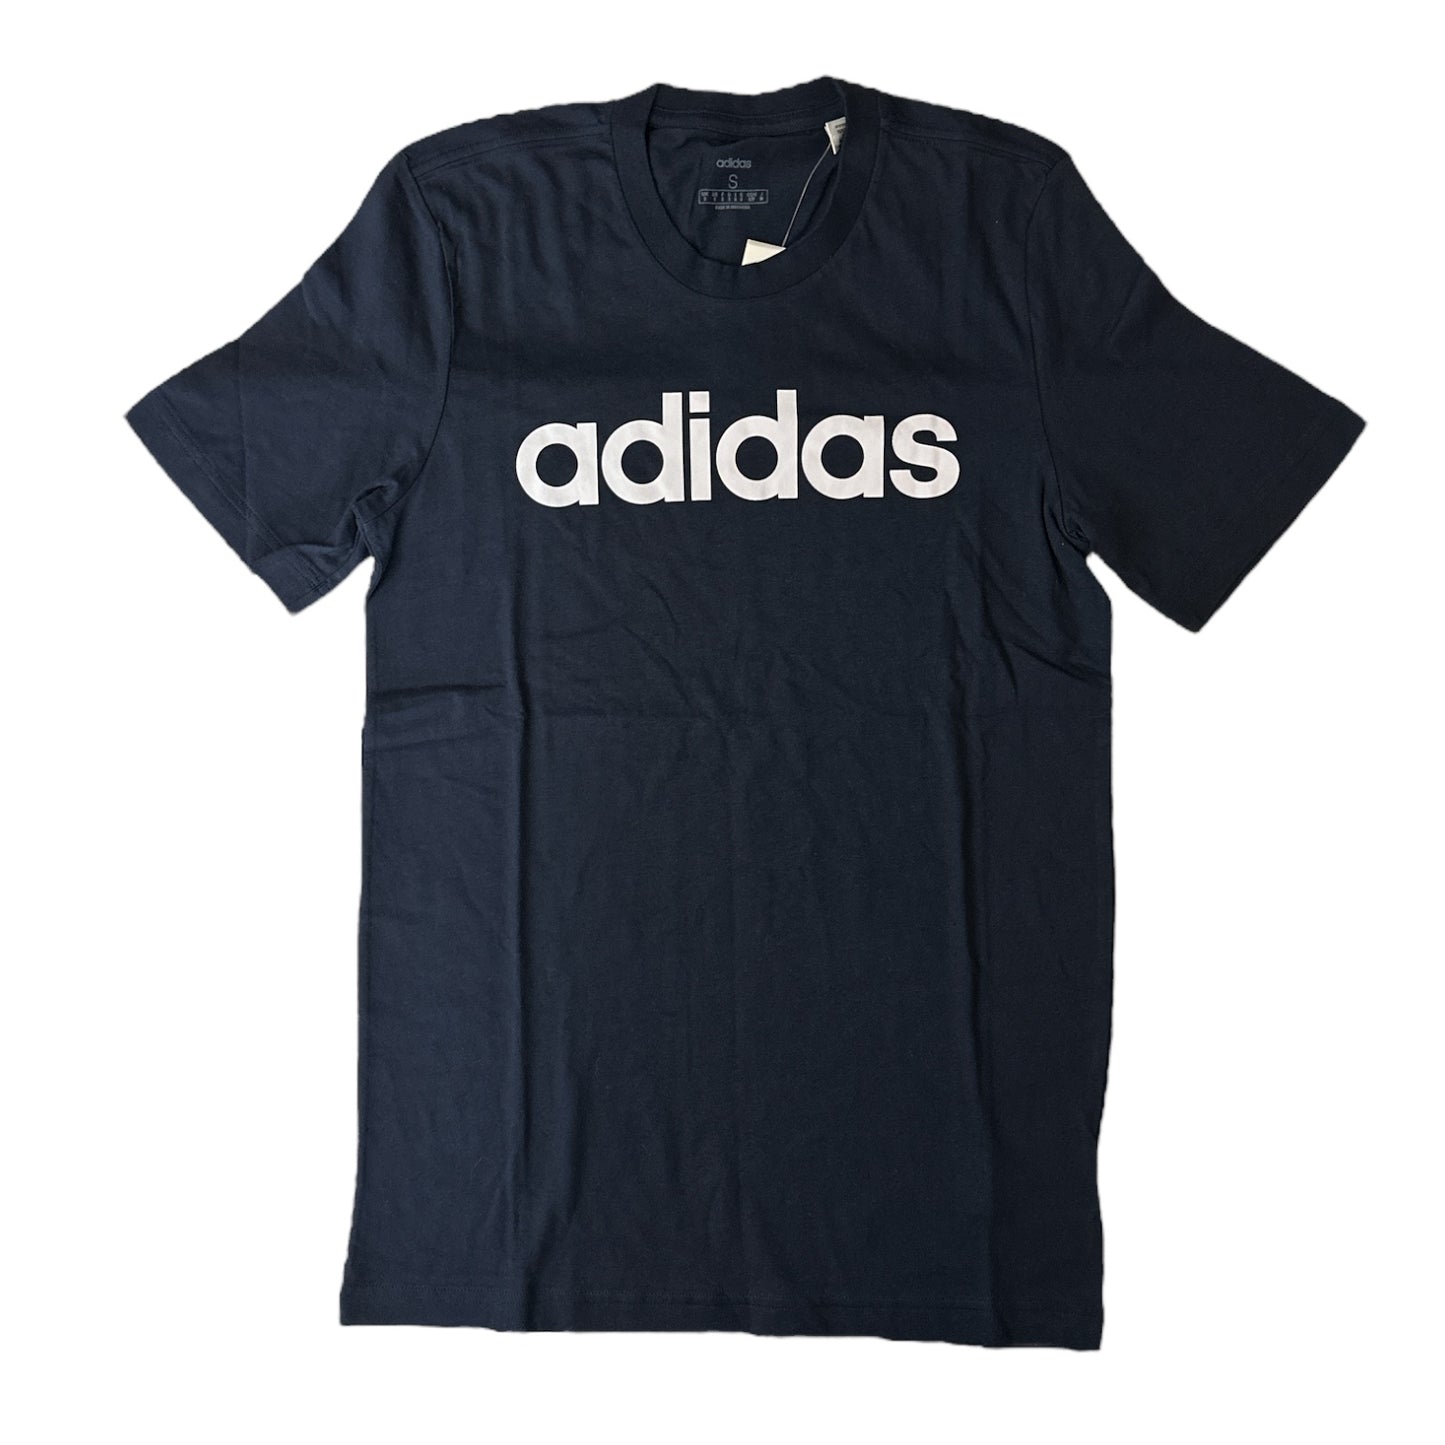 Adidas Men's Big Logo Graphic Print Short Sleeve Crewneck Tee